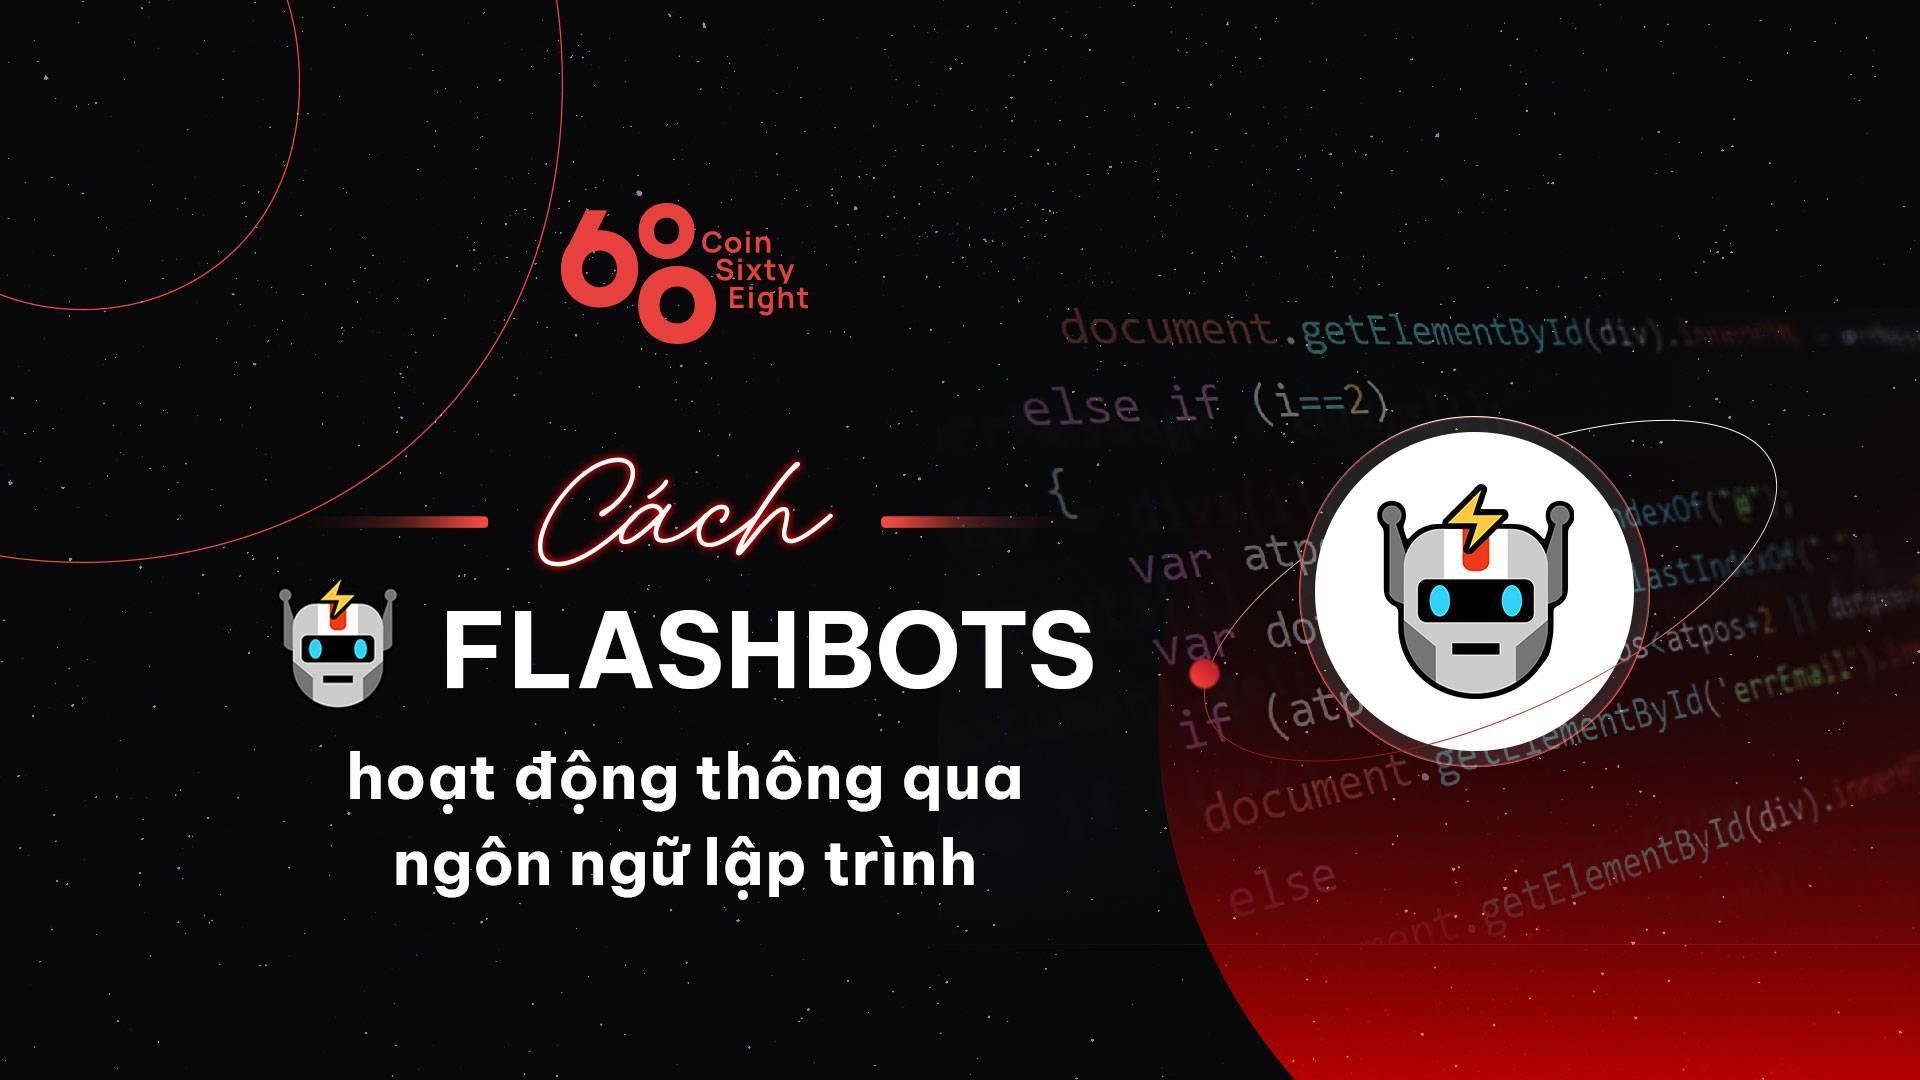 cach-flashbots-hoat-dong-thong-qua-ngon-ngu-lap-trinh